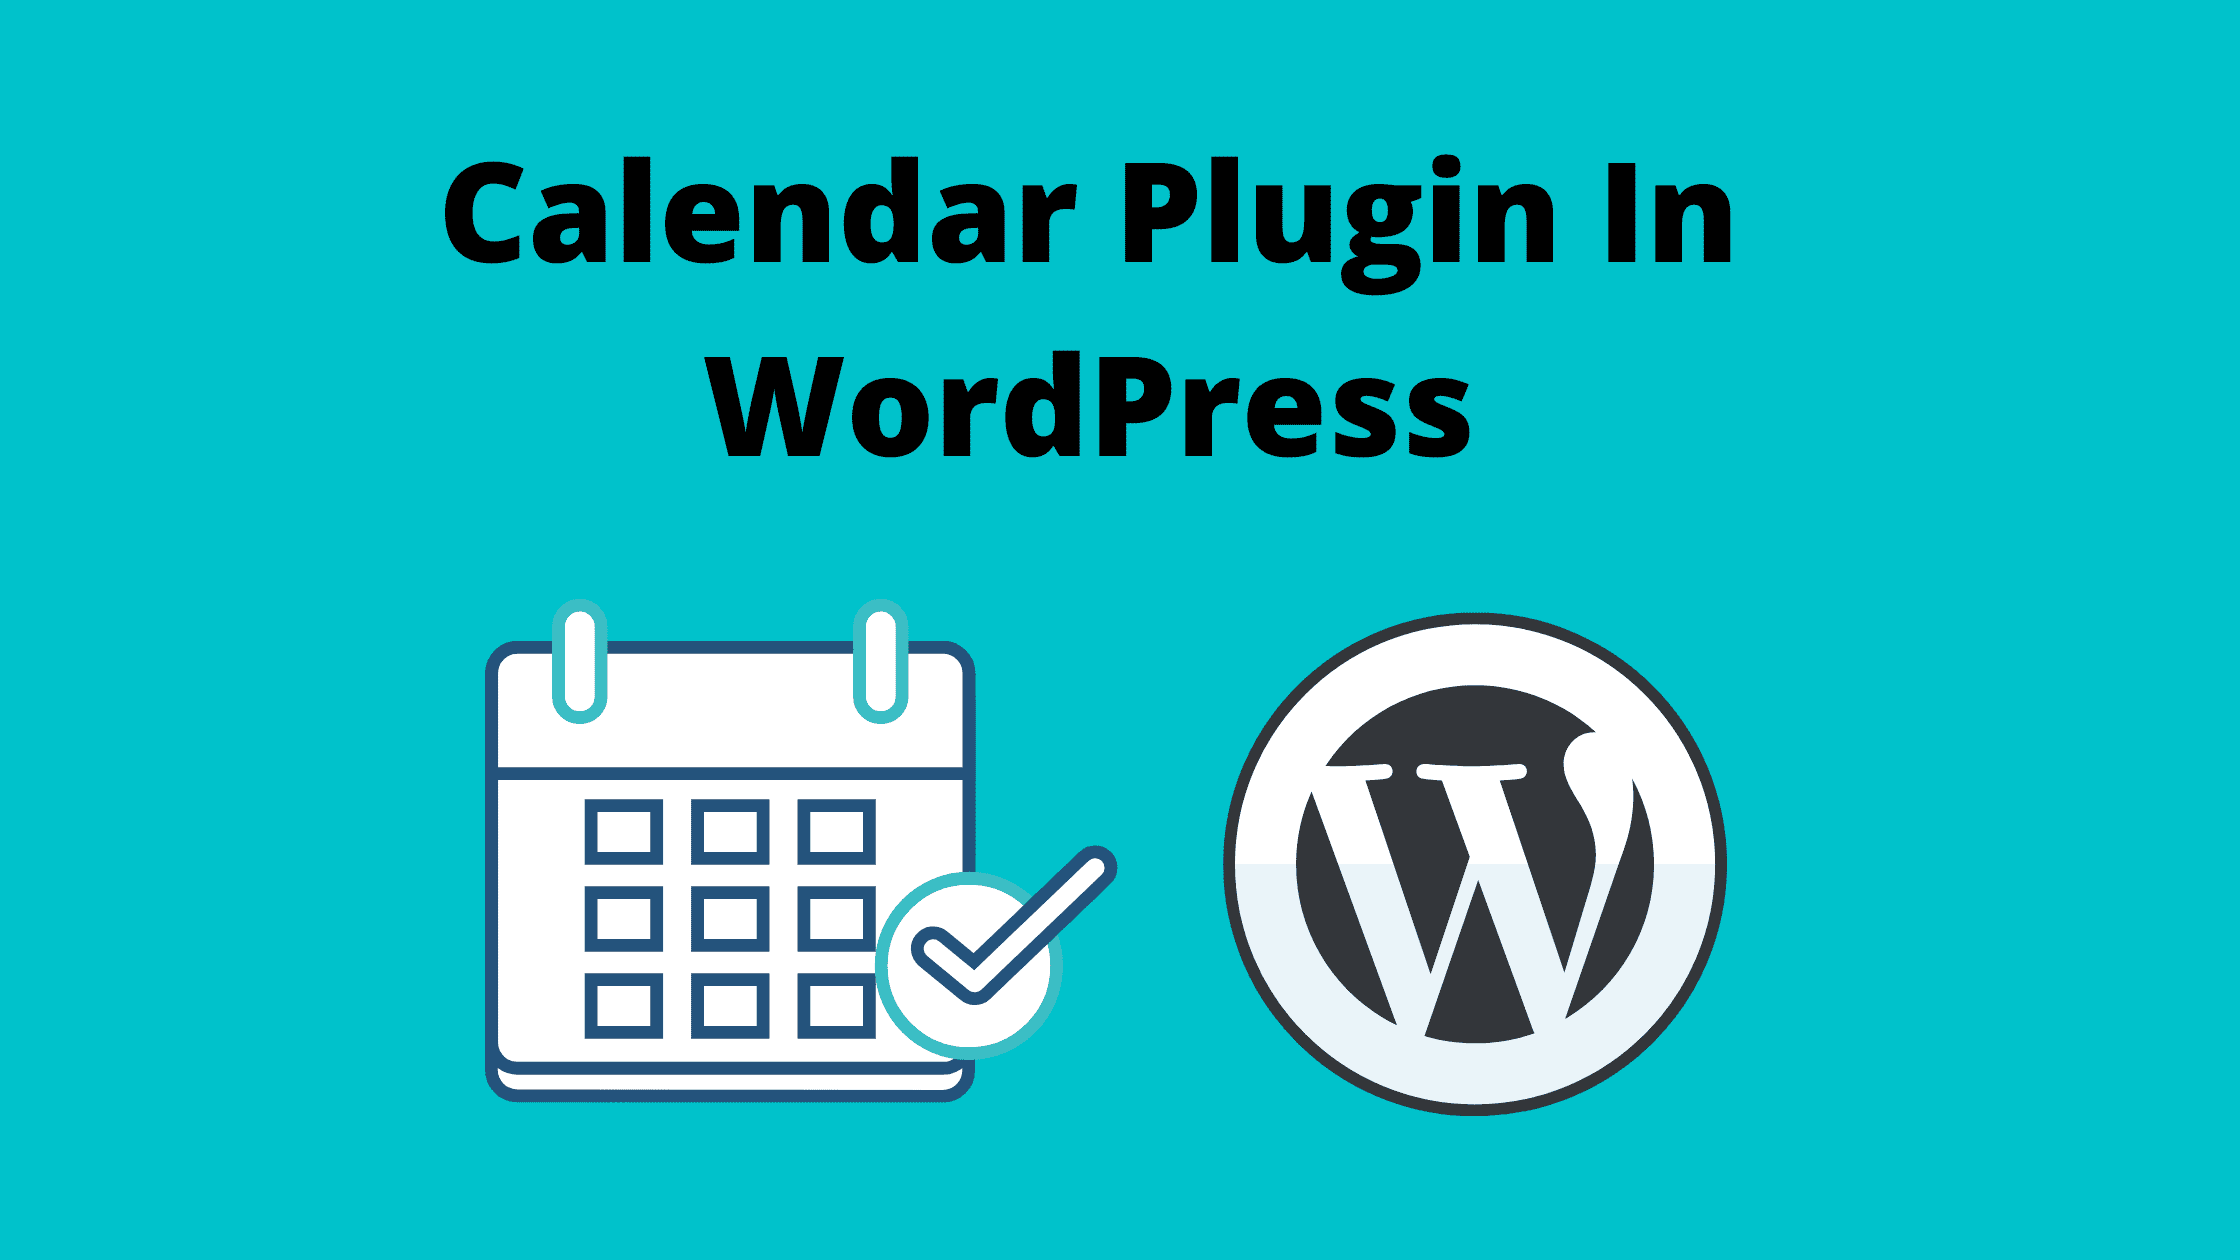 Calendar Plugin In WordPress